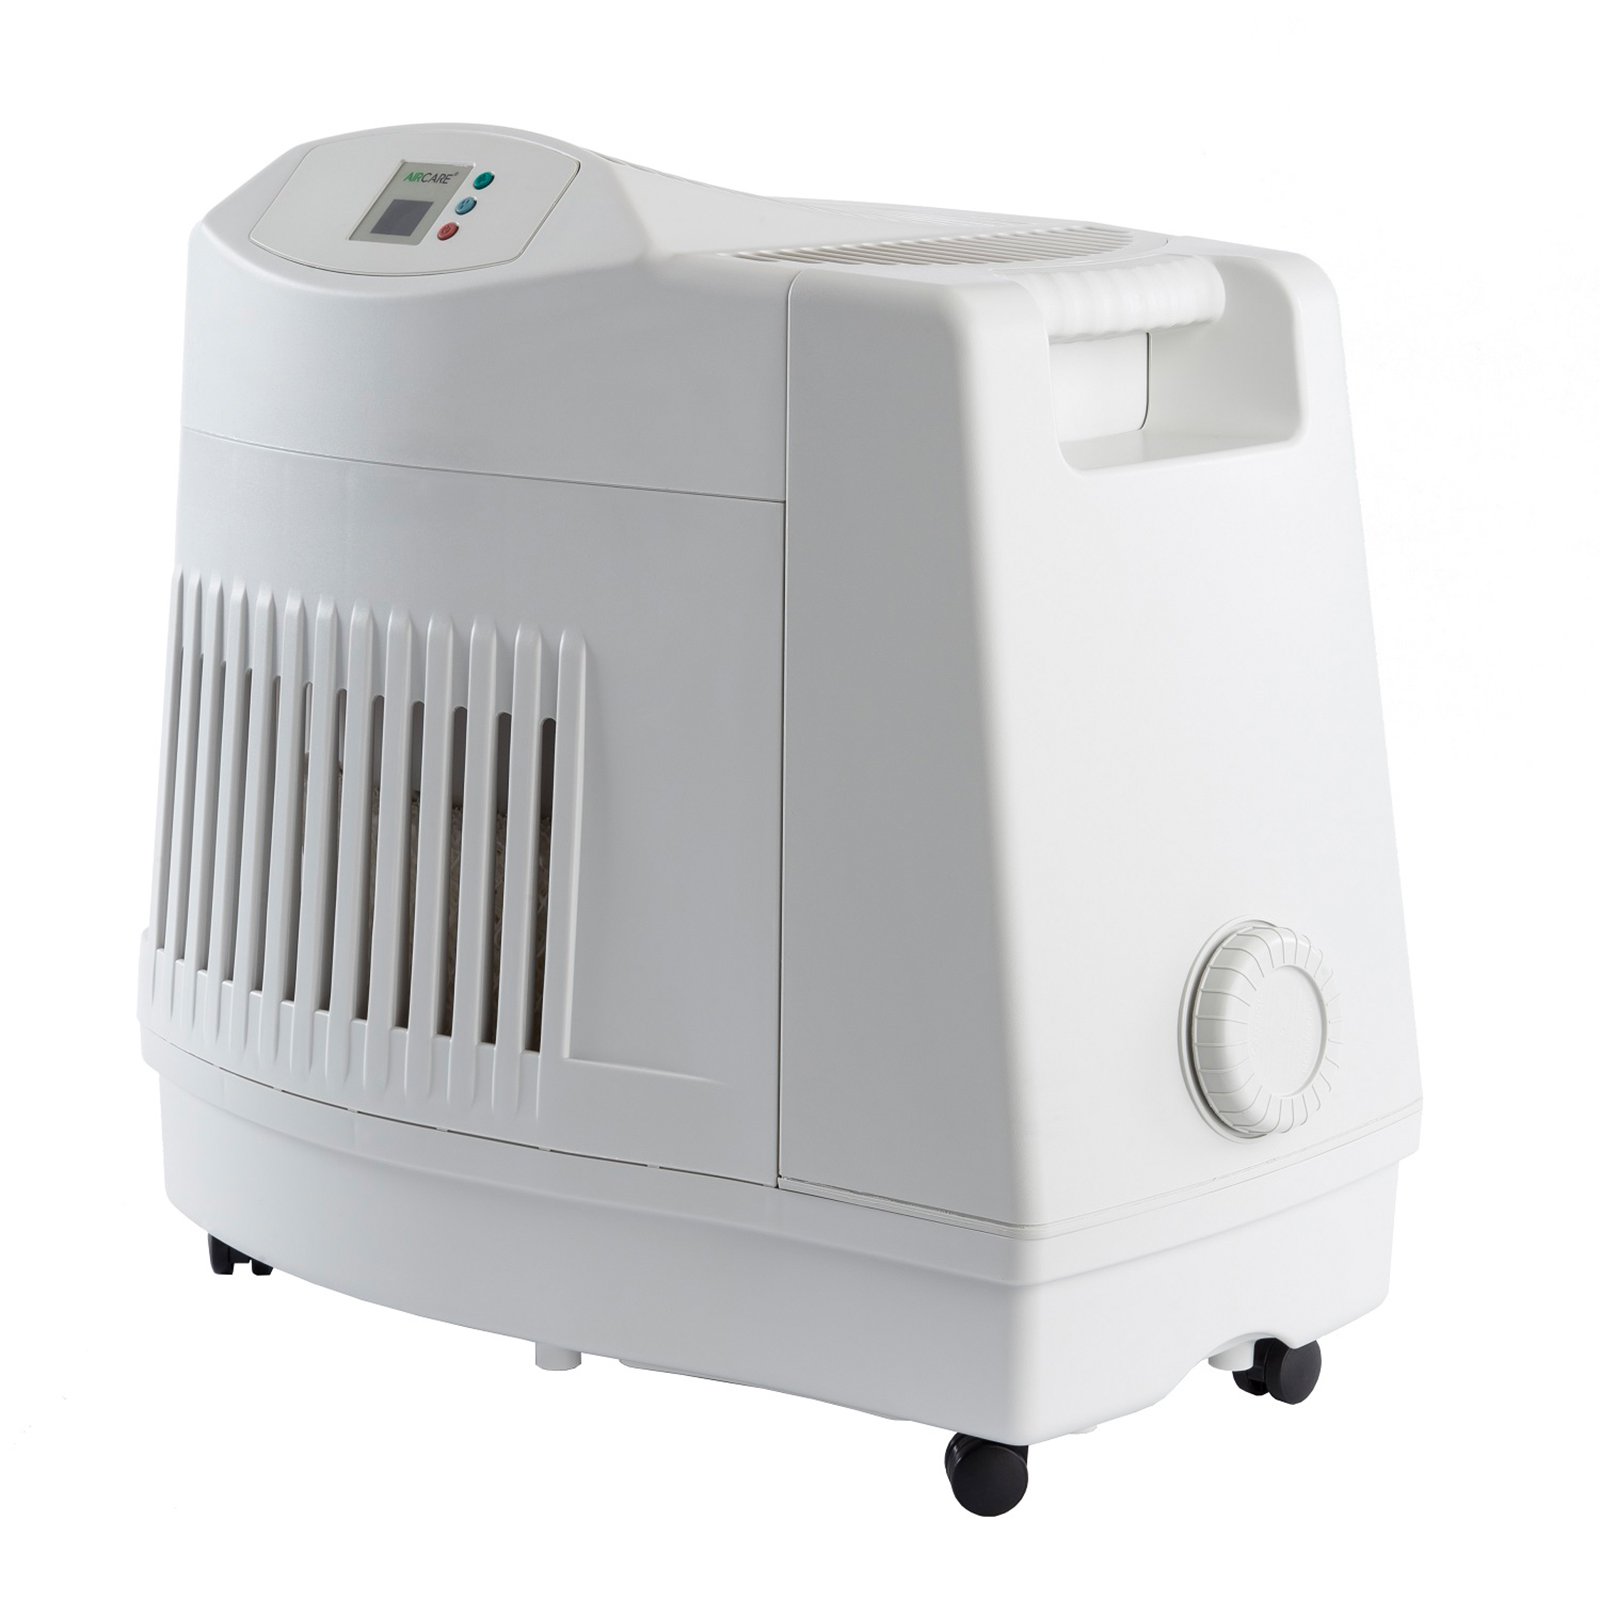 AIRCARE MA1201 Whole-House Console-Style Evaporative Humidifier, White - image 2 of 2